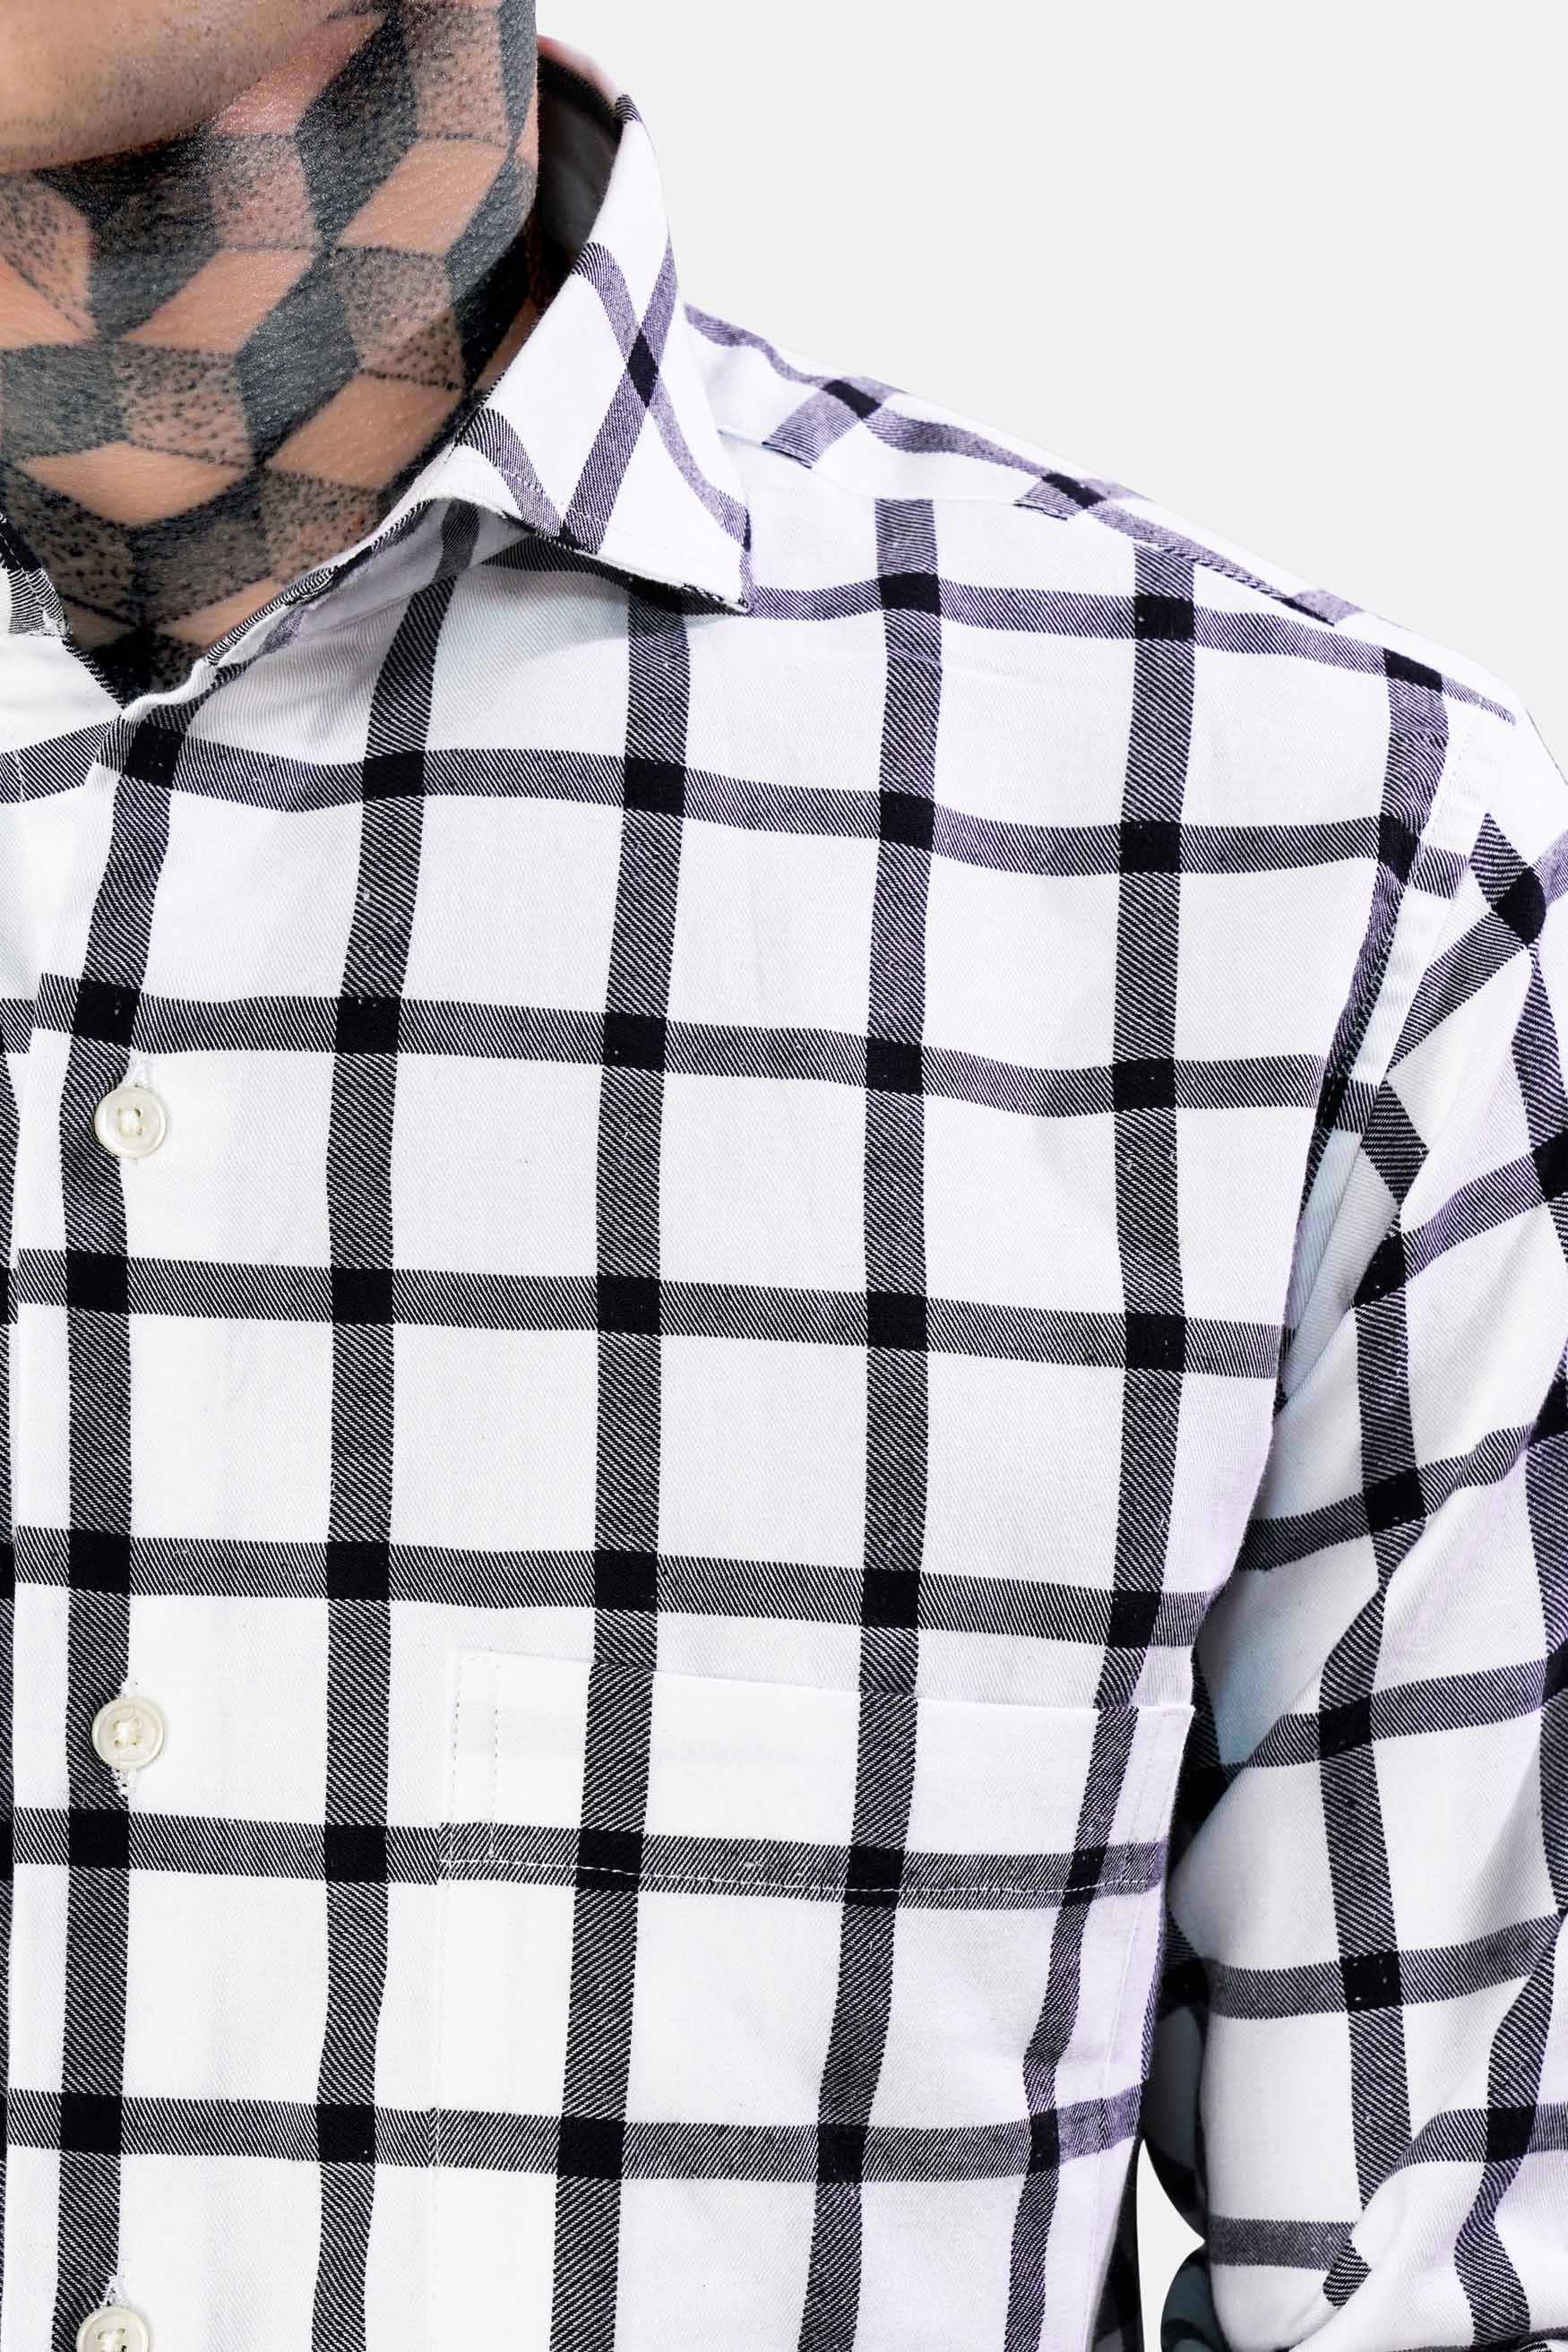 Bright White and Black Checkered Twill Premium Cotton Shirt